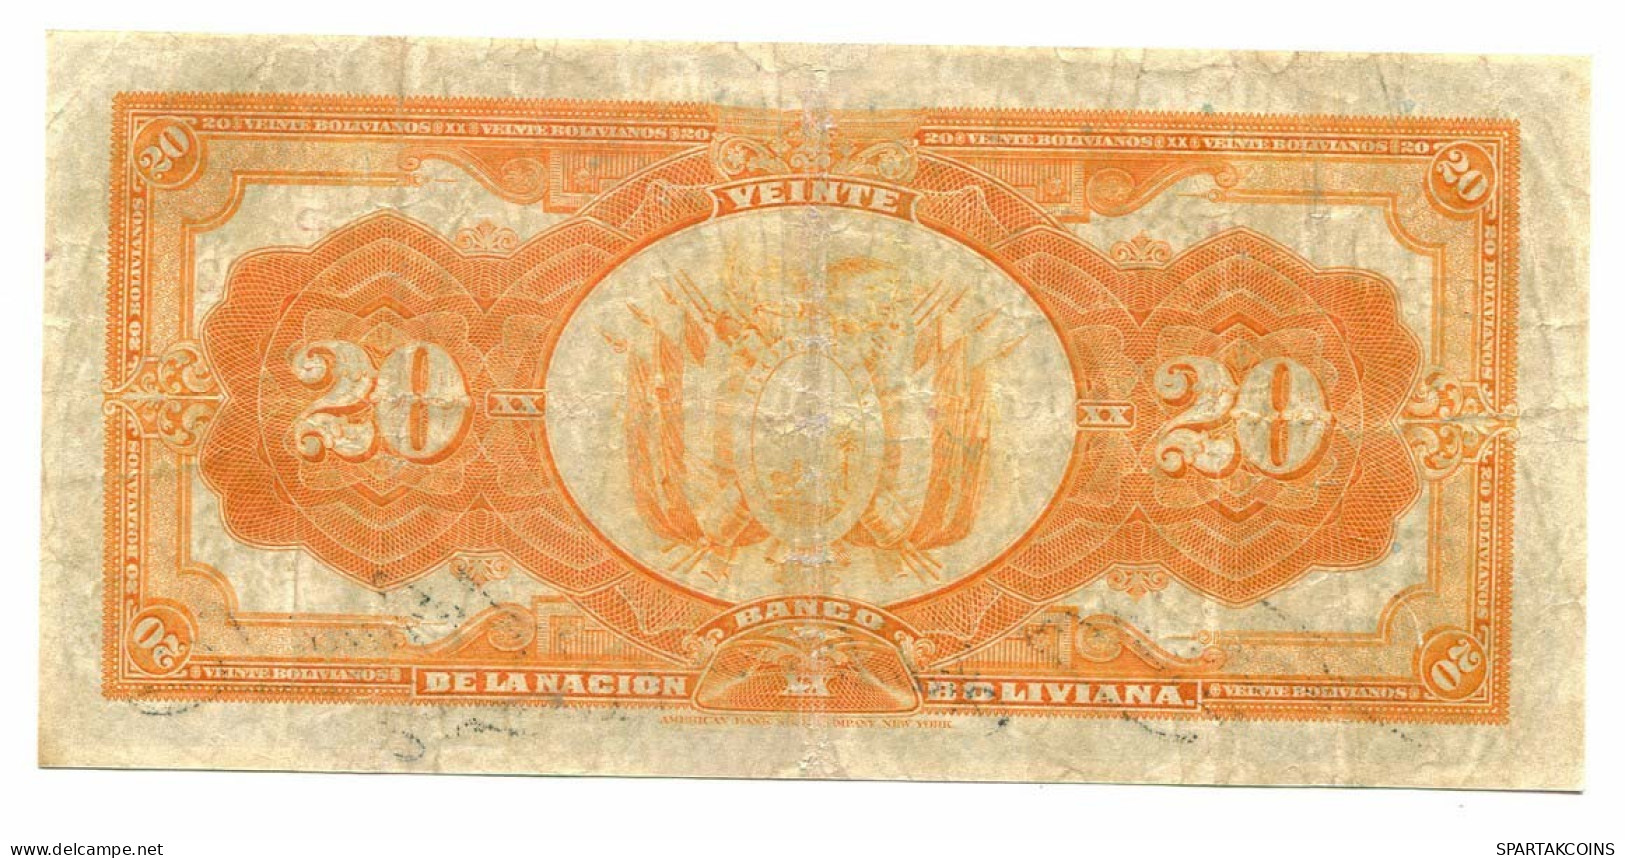 BOLIVIA 20 BOLIVIANOS 1911 SERIE D Paper Money Banknote #P10795.4 - [11] Emisiones Locales